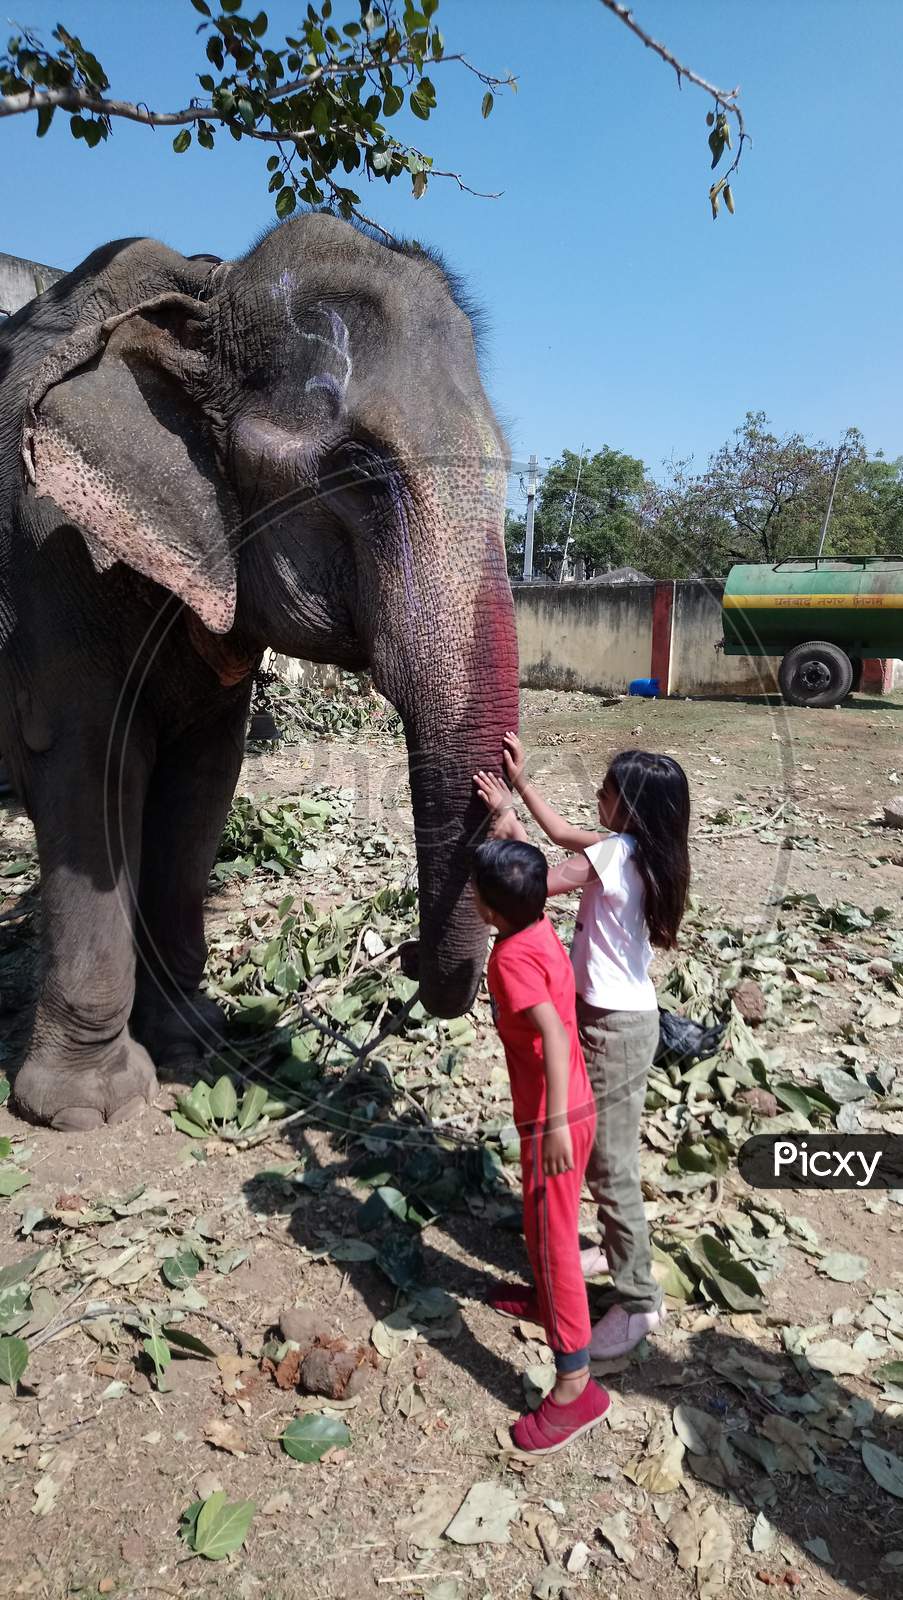 Children's enjoy with elephant